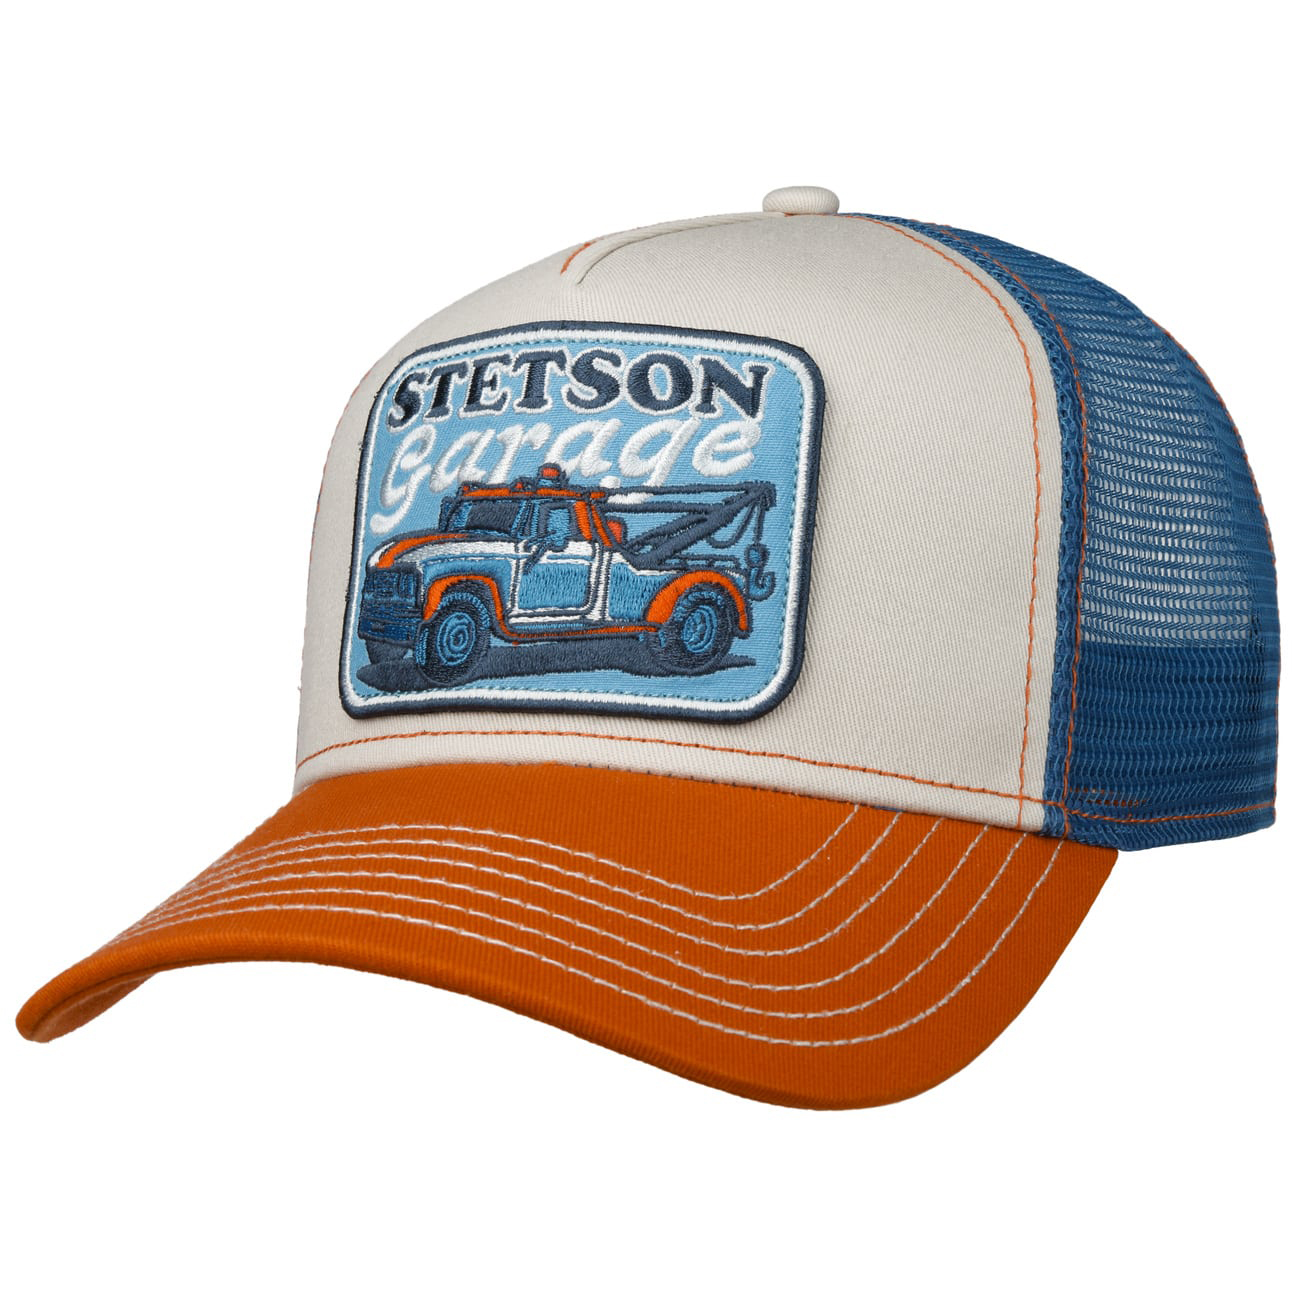 Stetson - Towing Service Trucker Cap - Orange